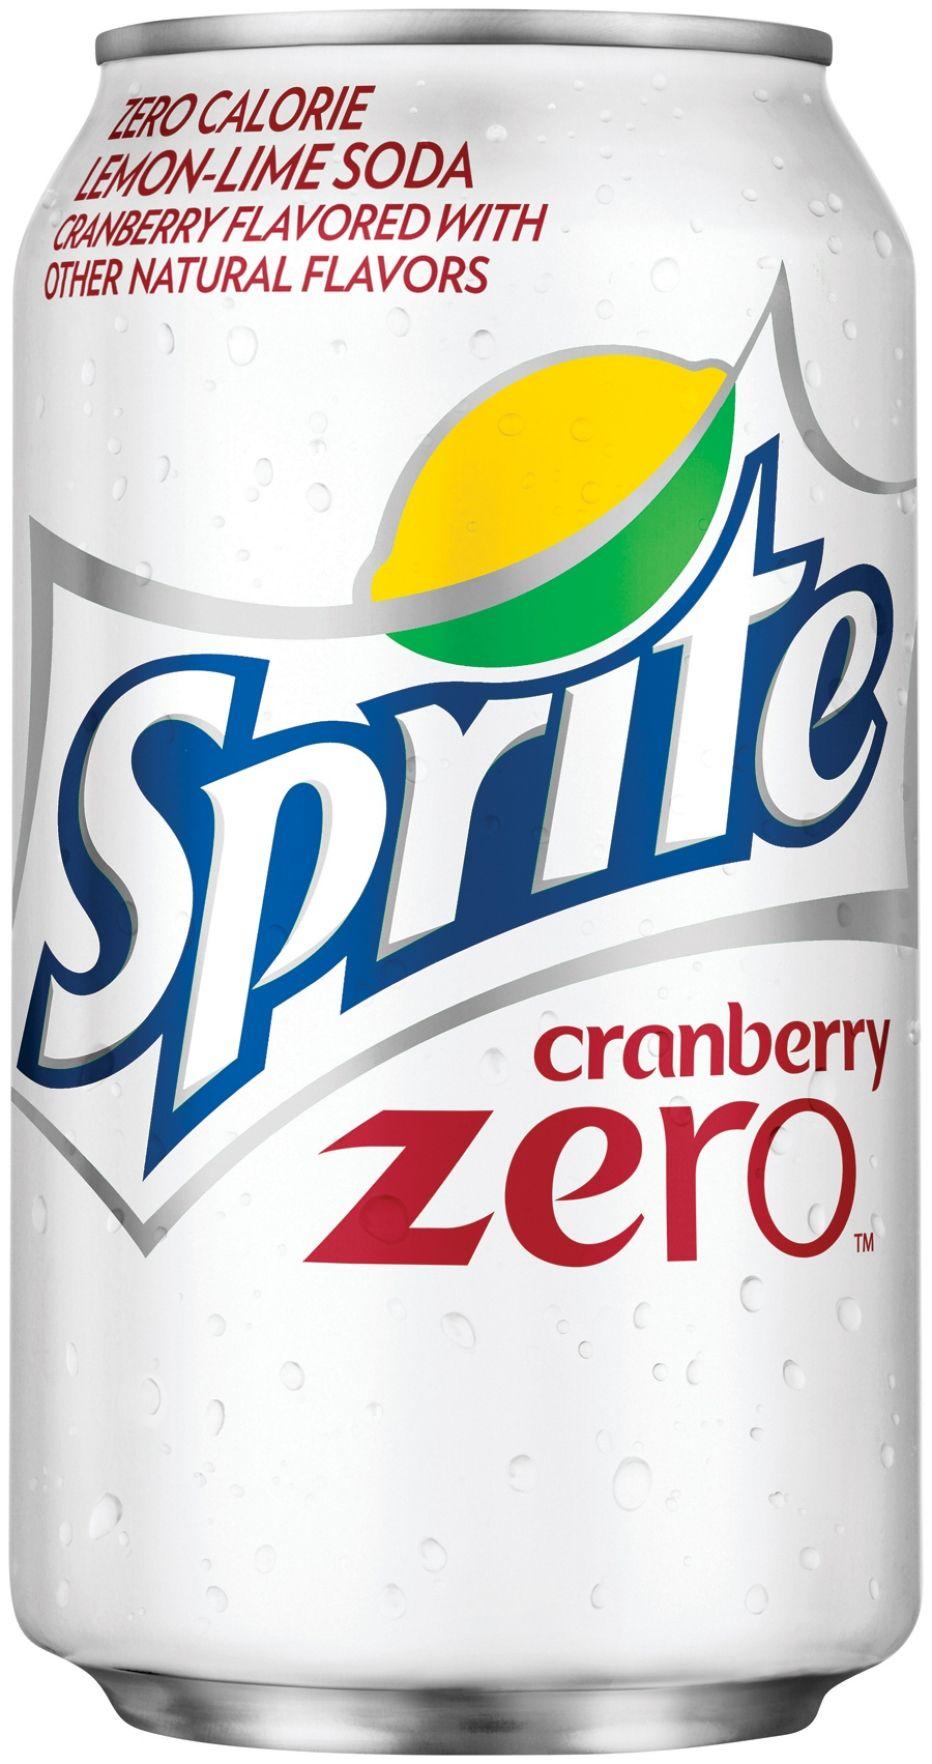 Sprite Logo - Sprite Cranberry Zero™: The Coca-Cola Company